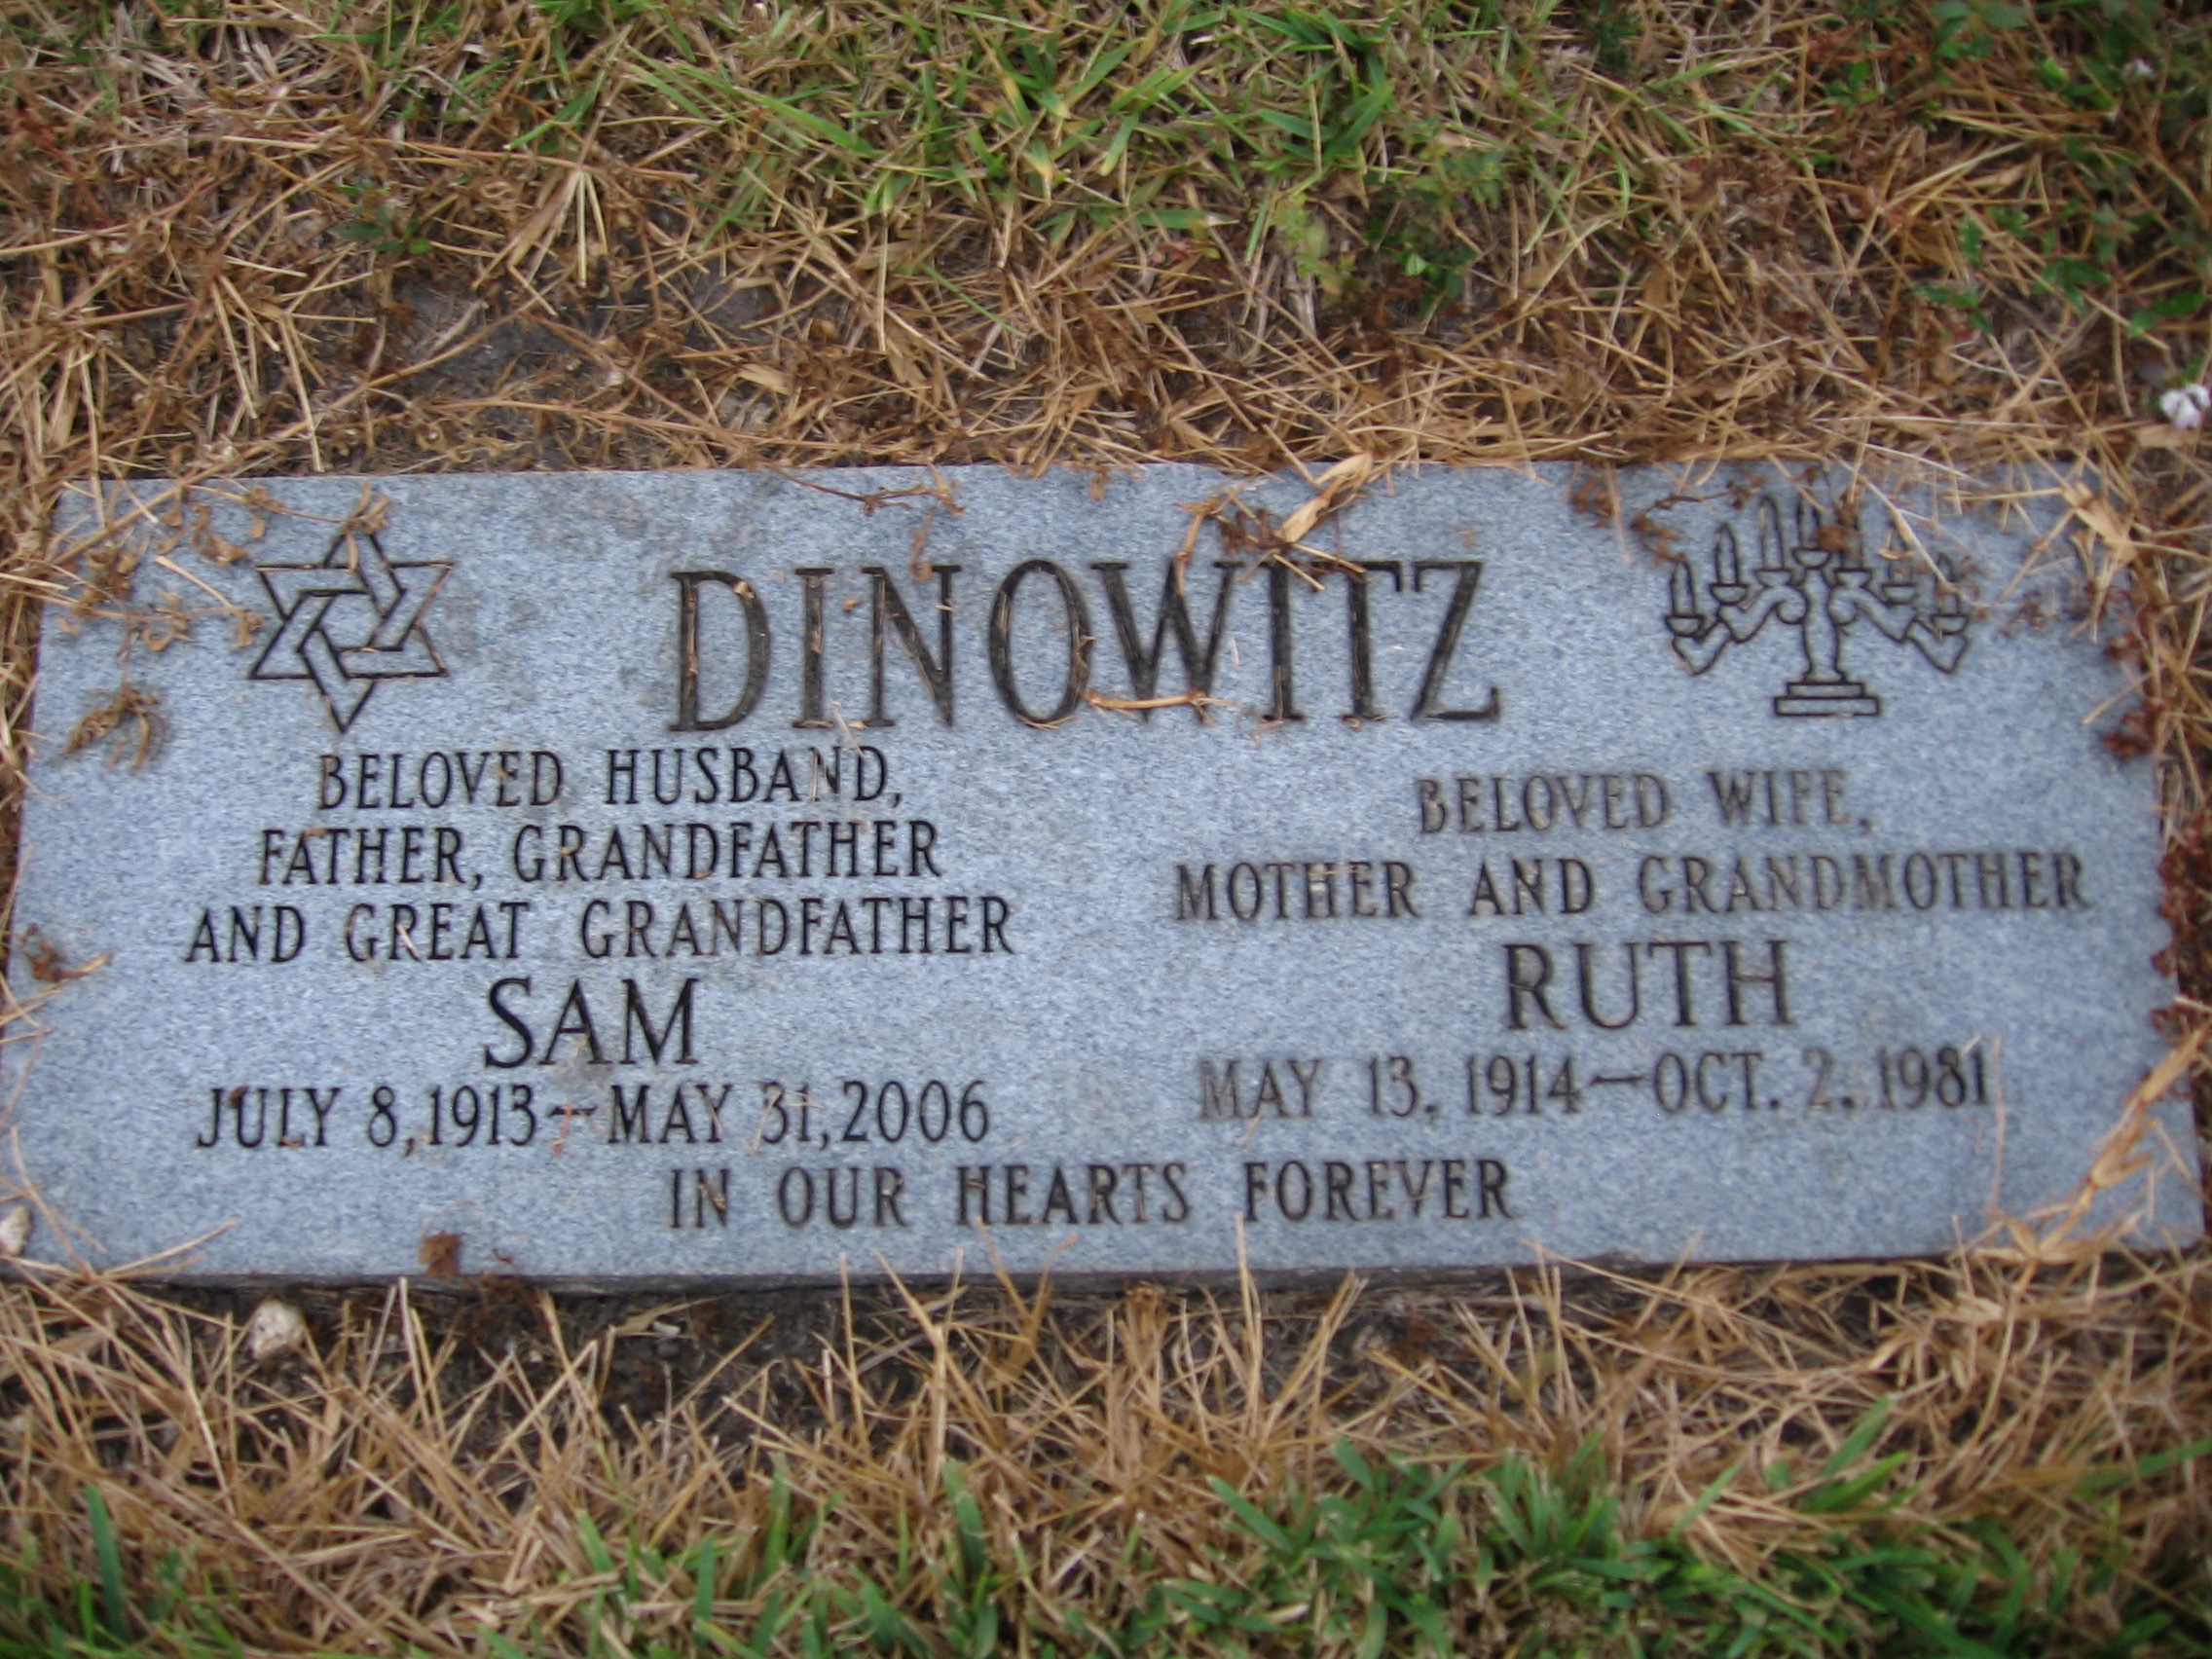 Ruth Dinowitz